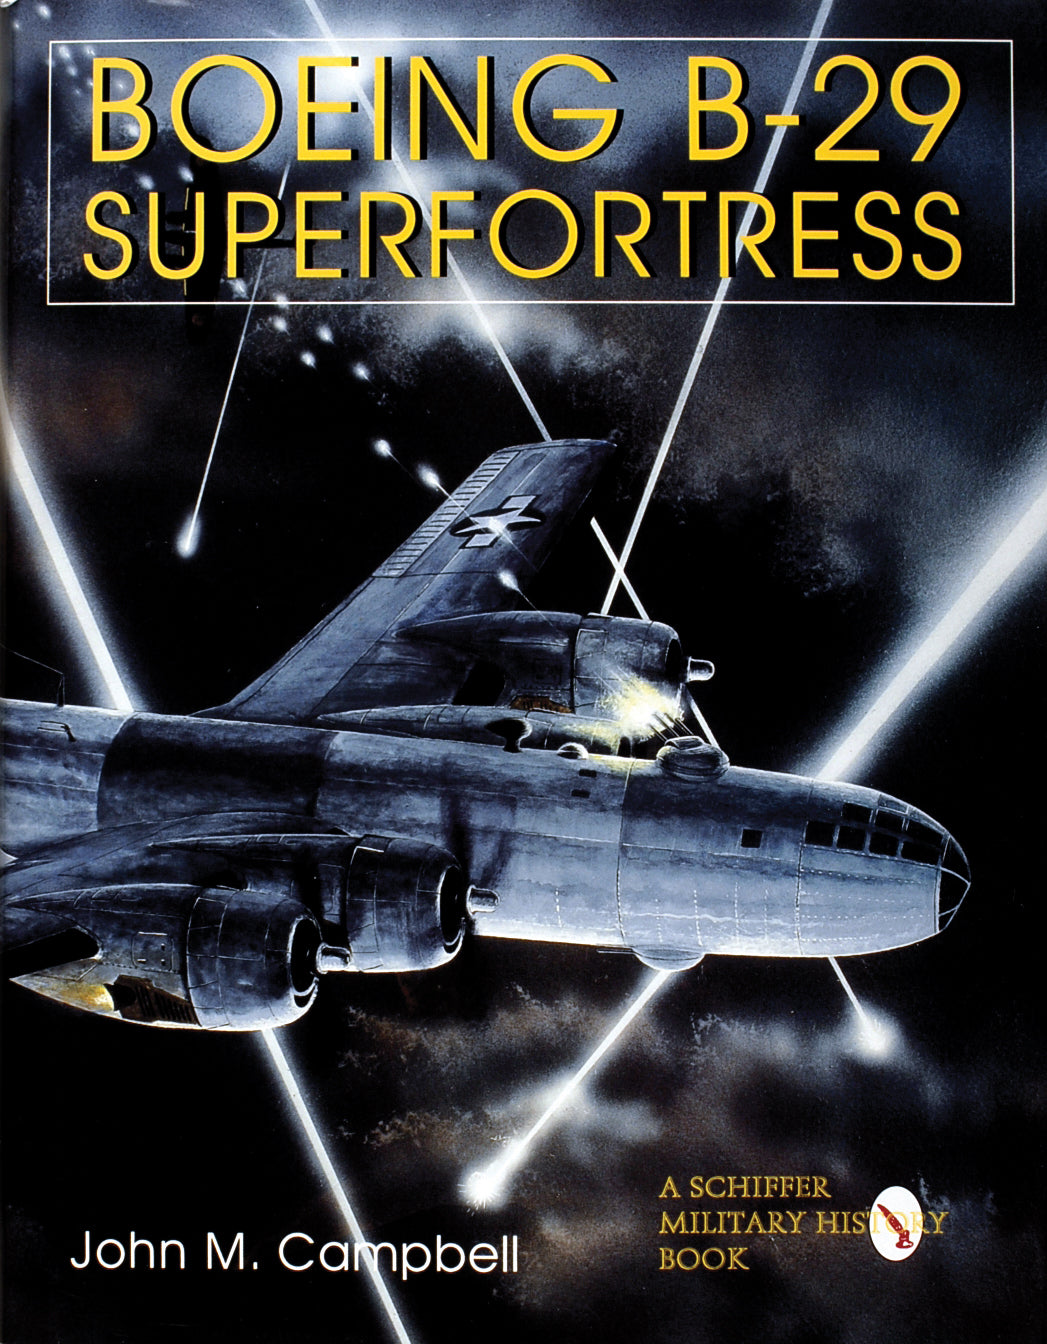 Boeing B-29 Superfortress  Vol. II